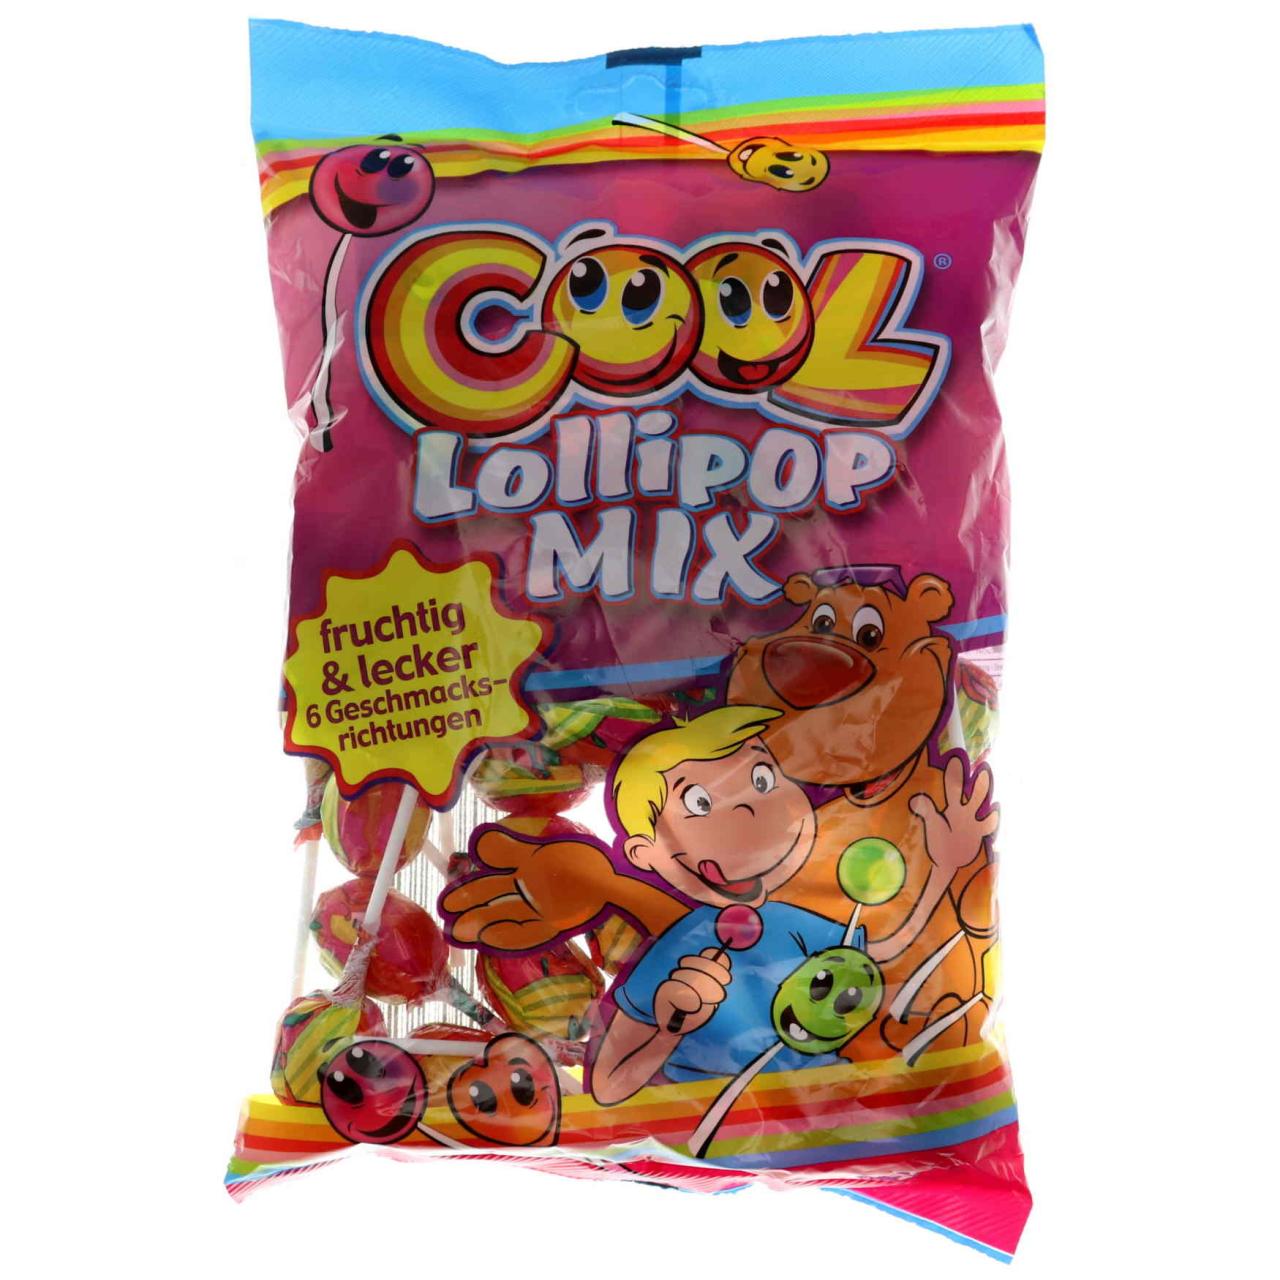 Cool Lollipop-Mix 500g